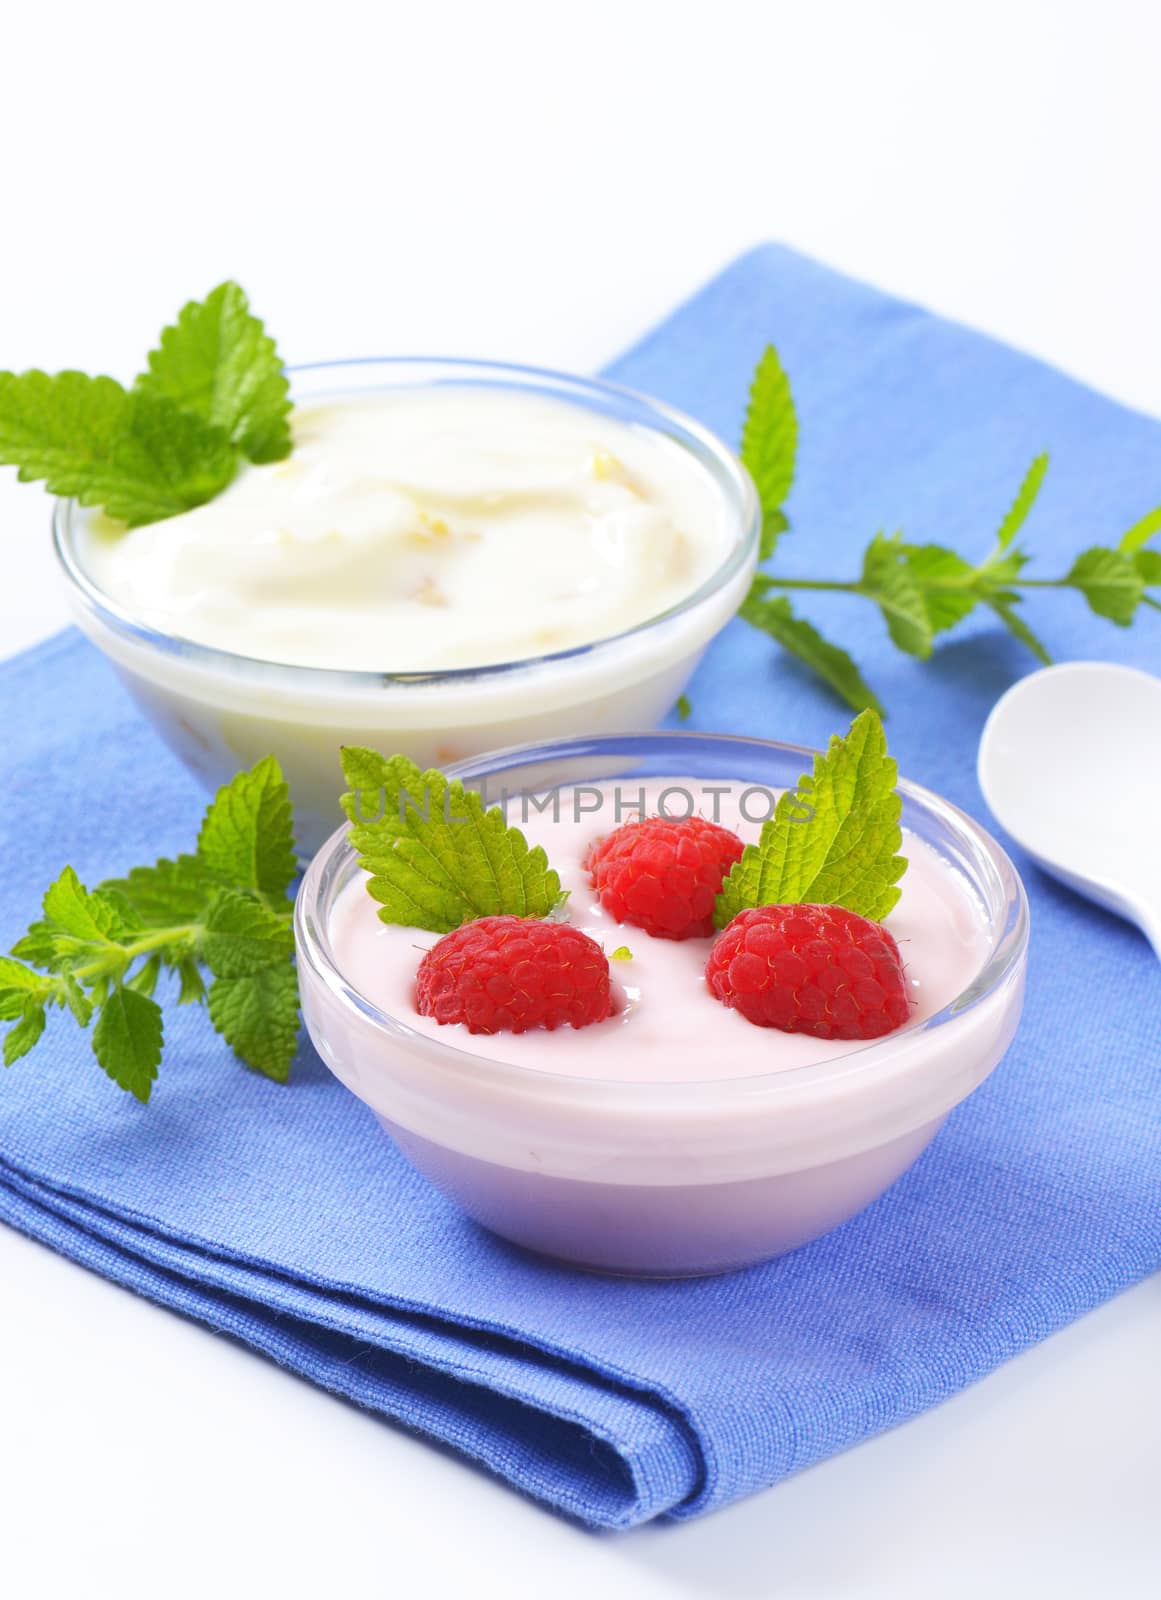 bowls of fruit yogurt by Digifoodstock